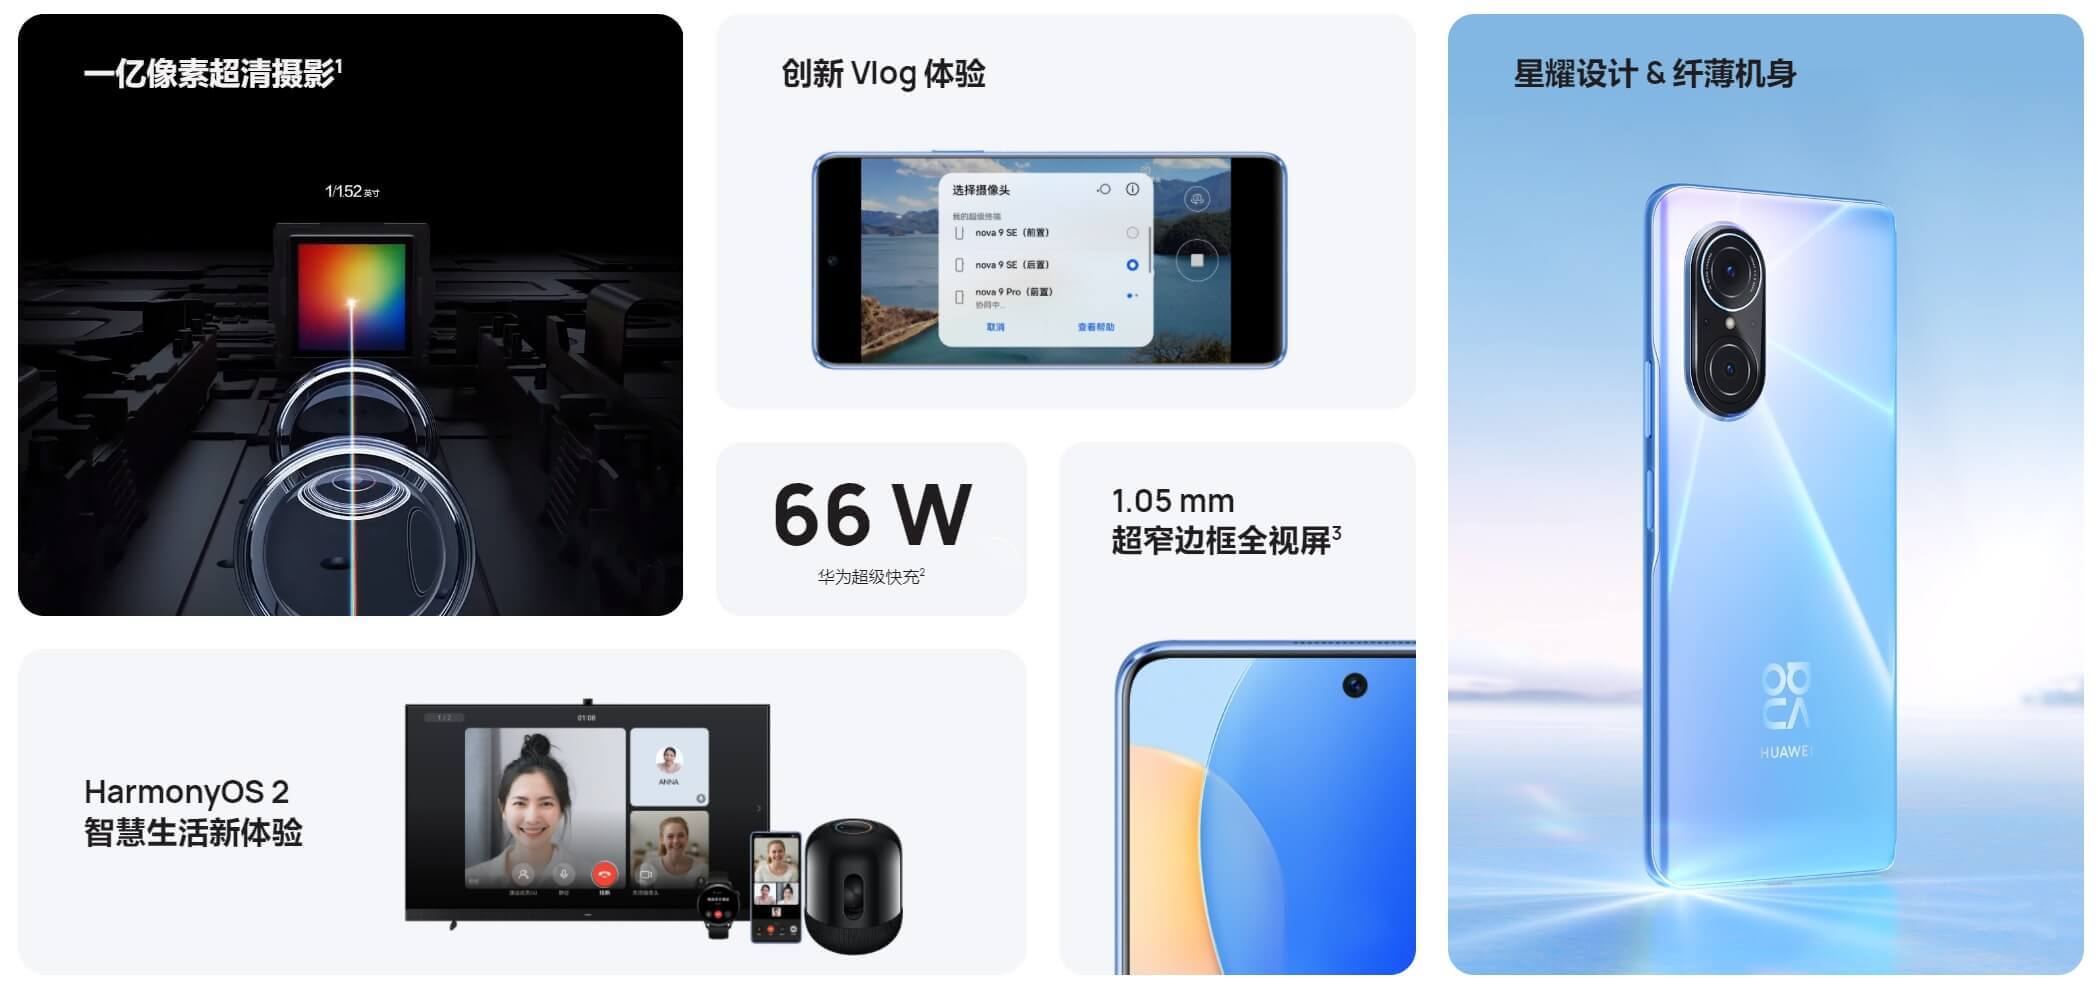 Huawei nova 9SE Features